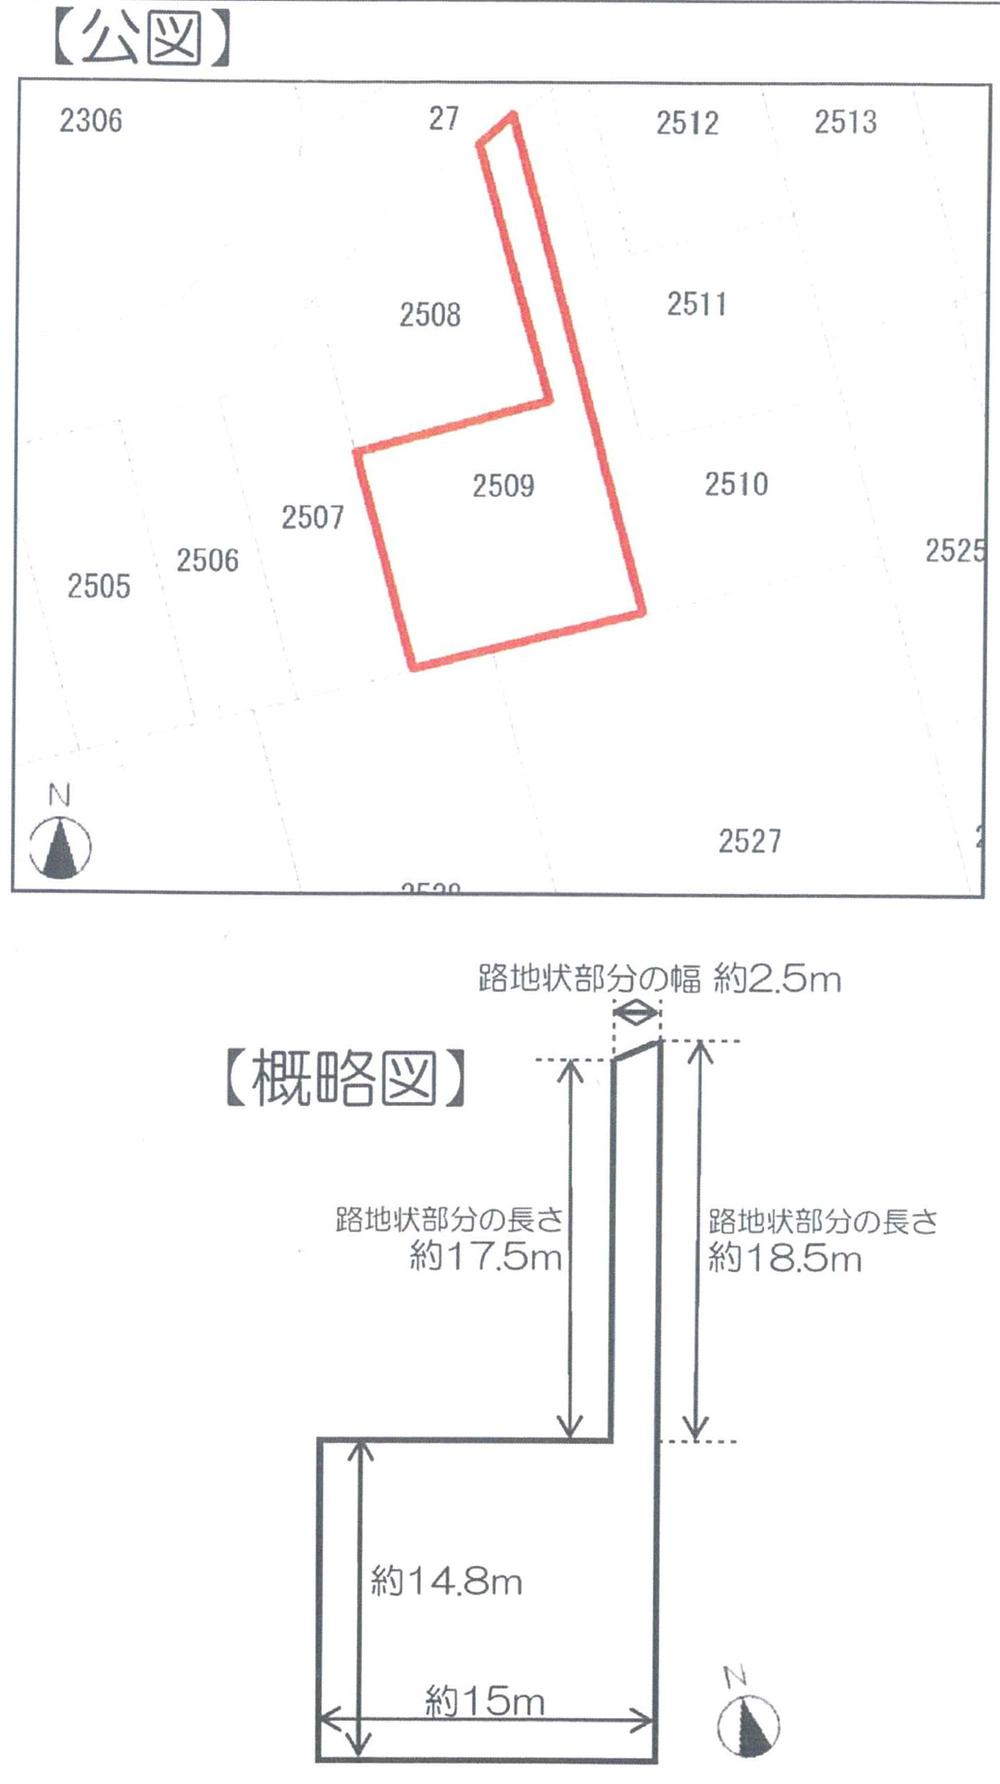 Compartment figure. Land price 23,700,000 yen, Land area 270.85 sq m